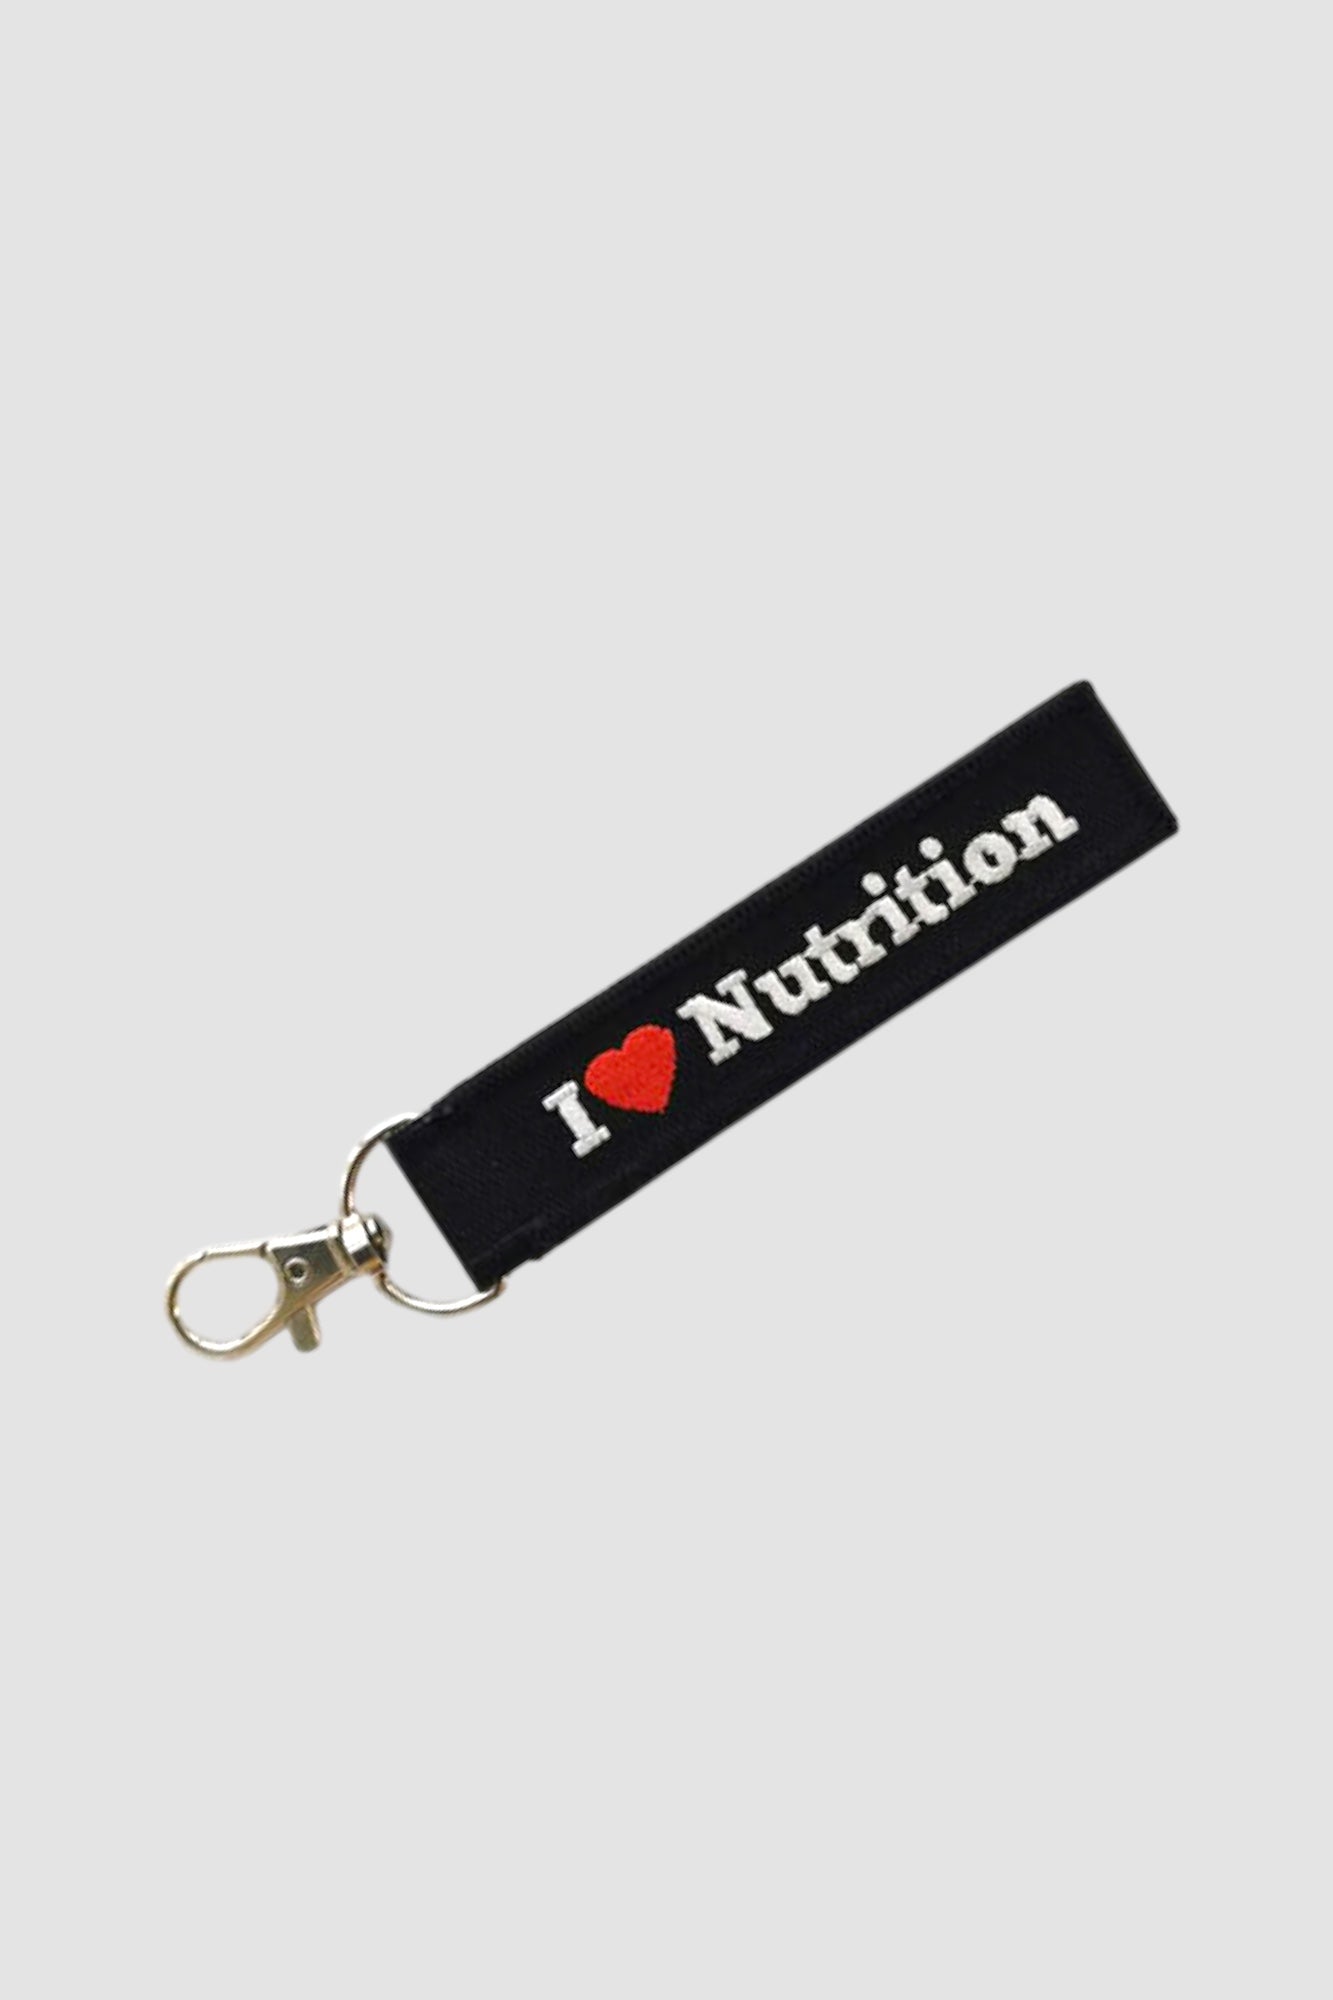 I Love Nutrition Key Chain